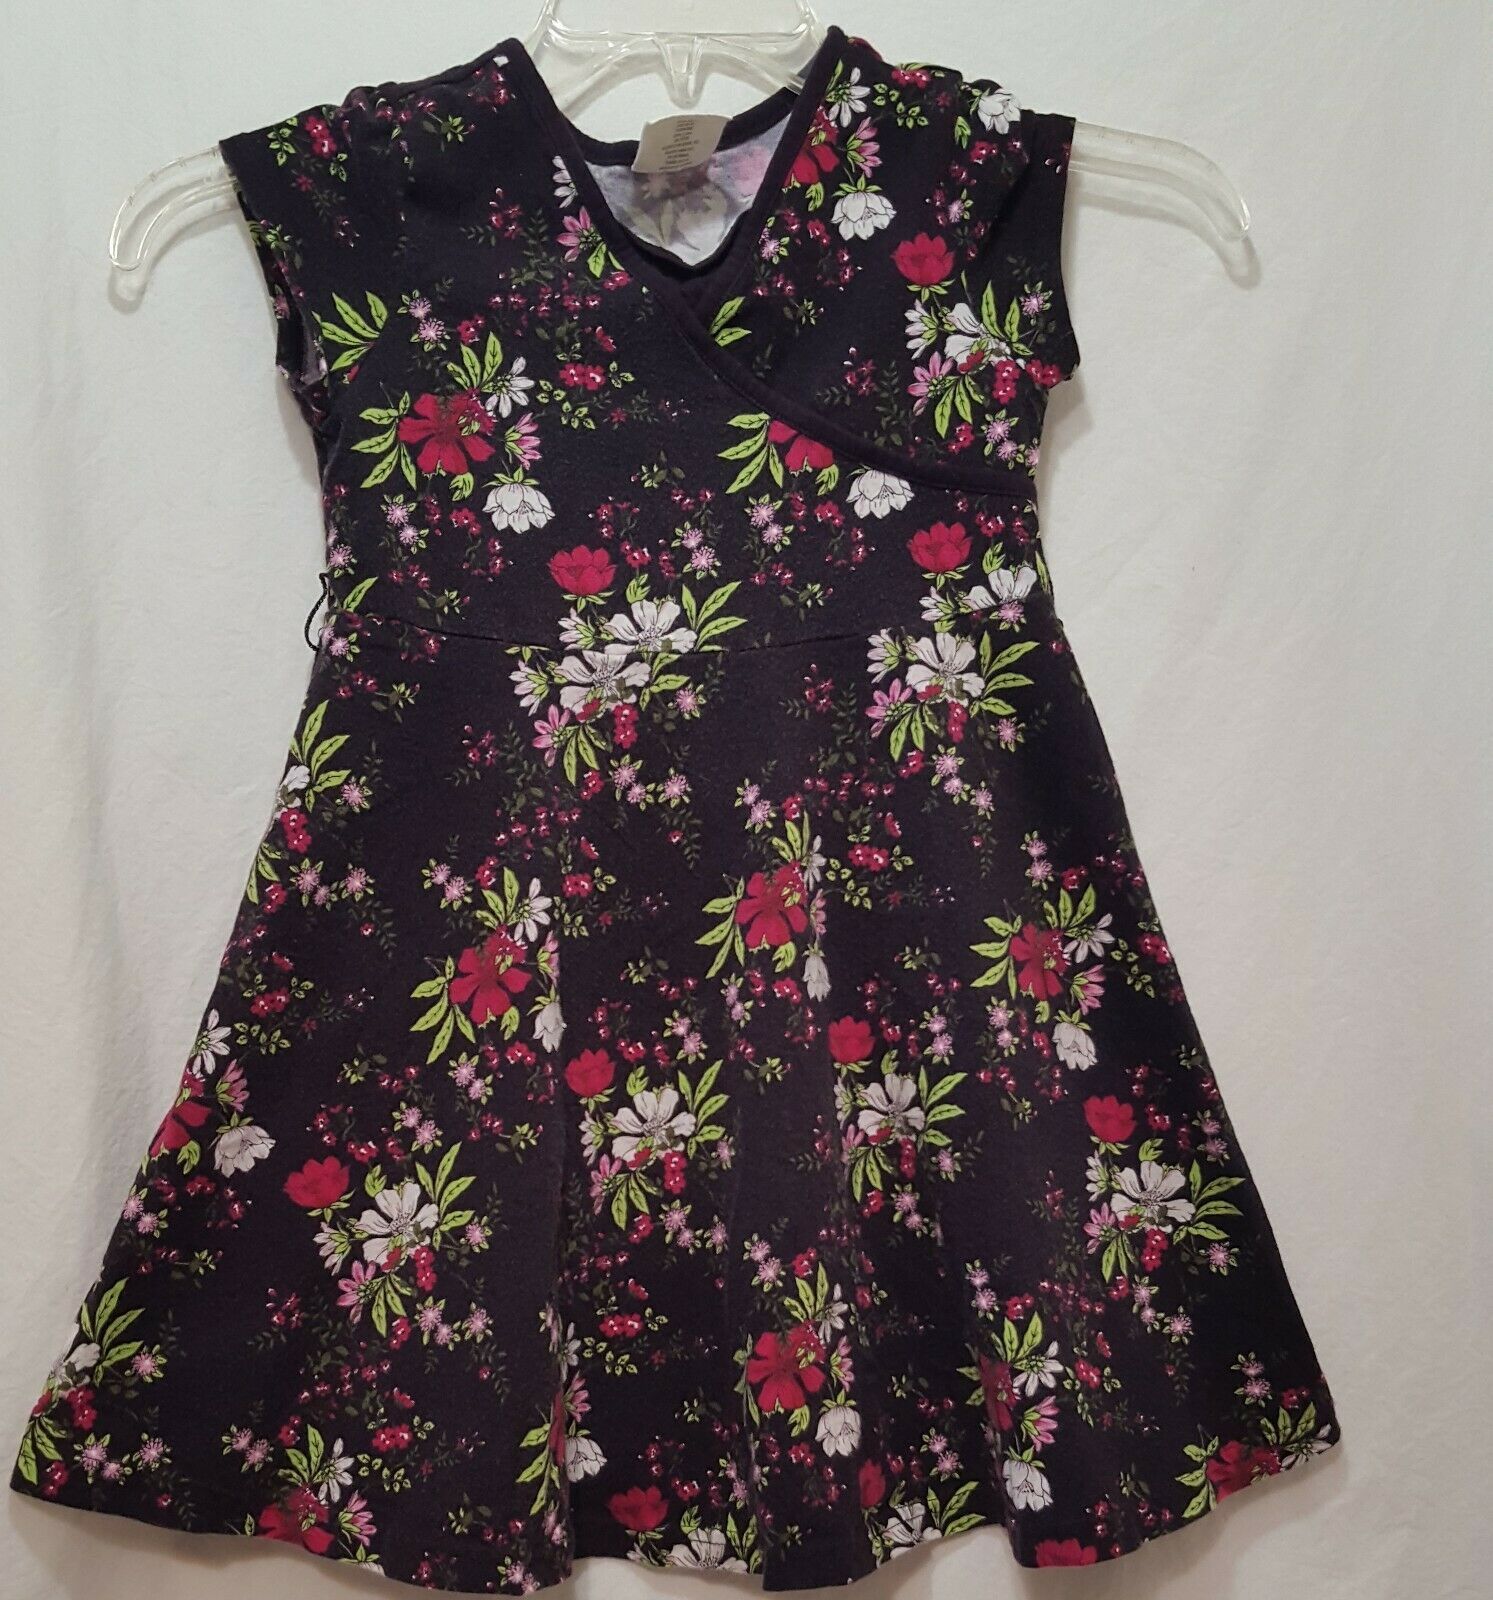 Dress Flowers Summer Size 7 to 8 Girls Crazy8 Black Pink Green - $14.56